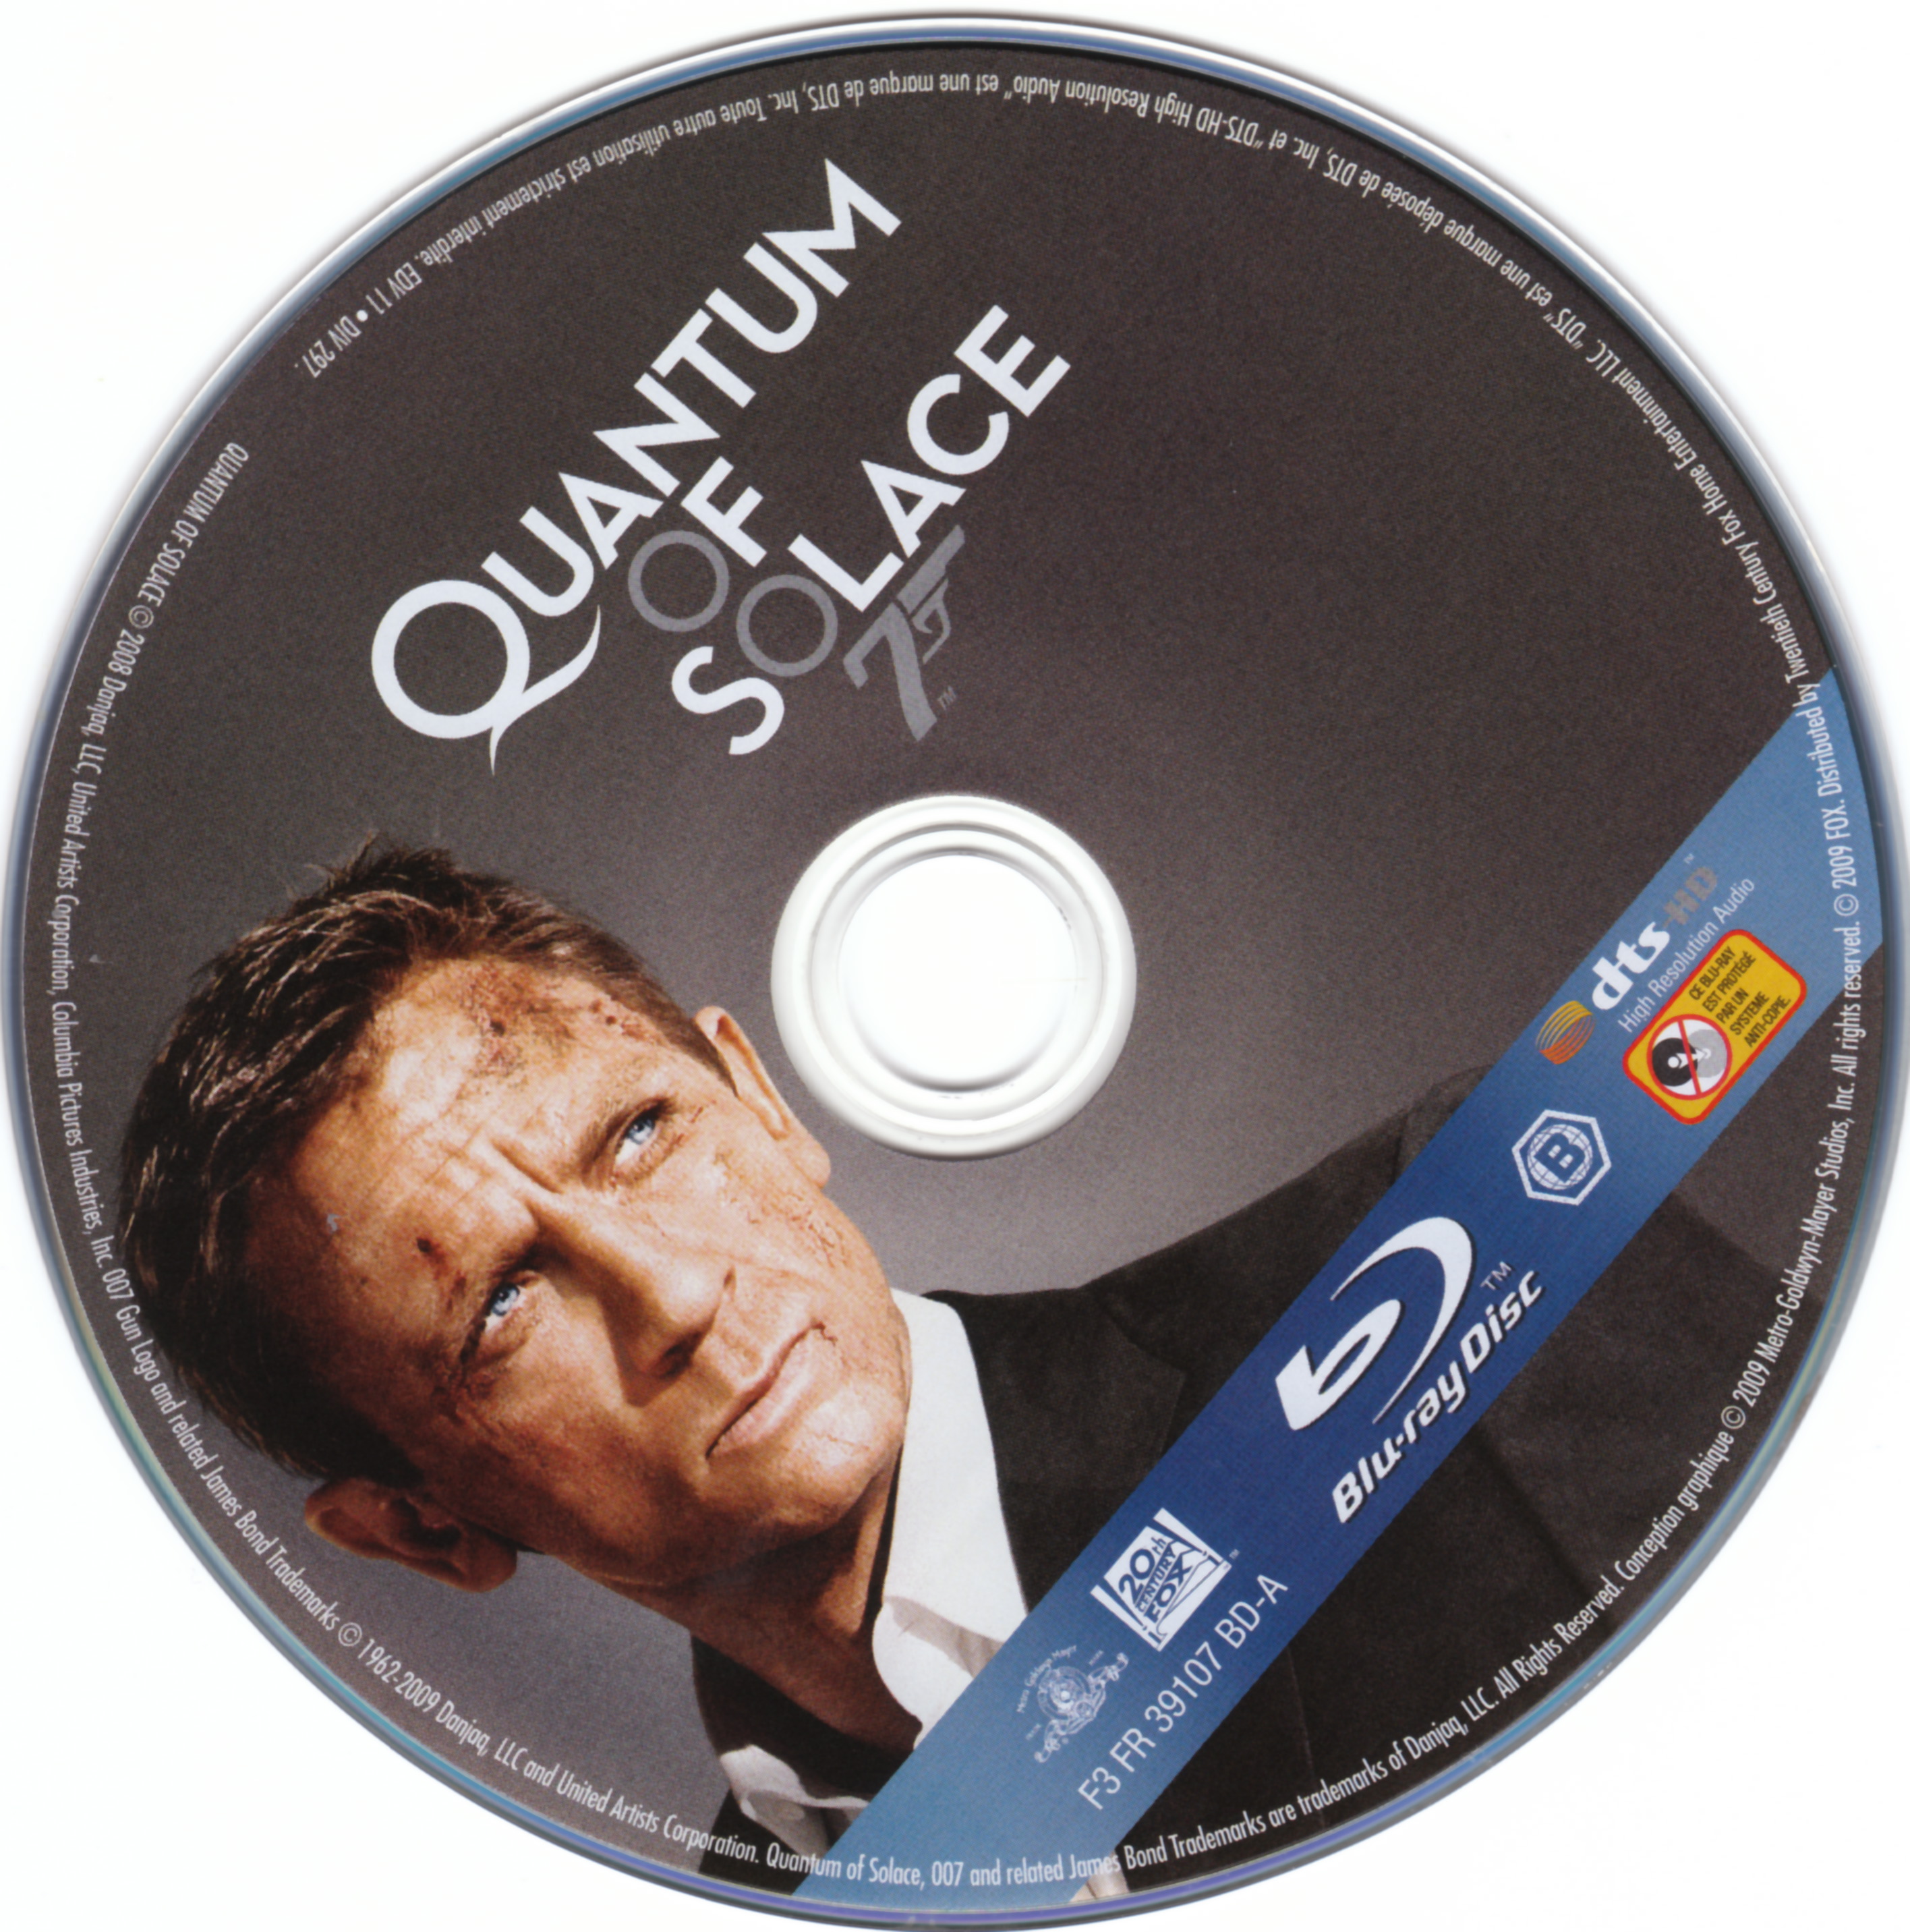 James Bond 007 Quantum of solace (BLU-RAY)